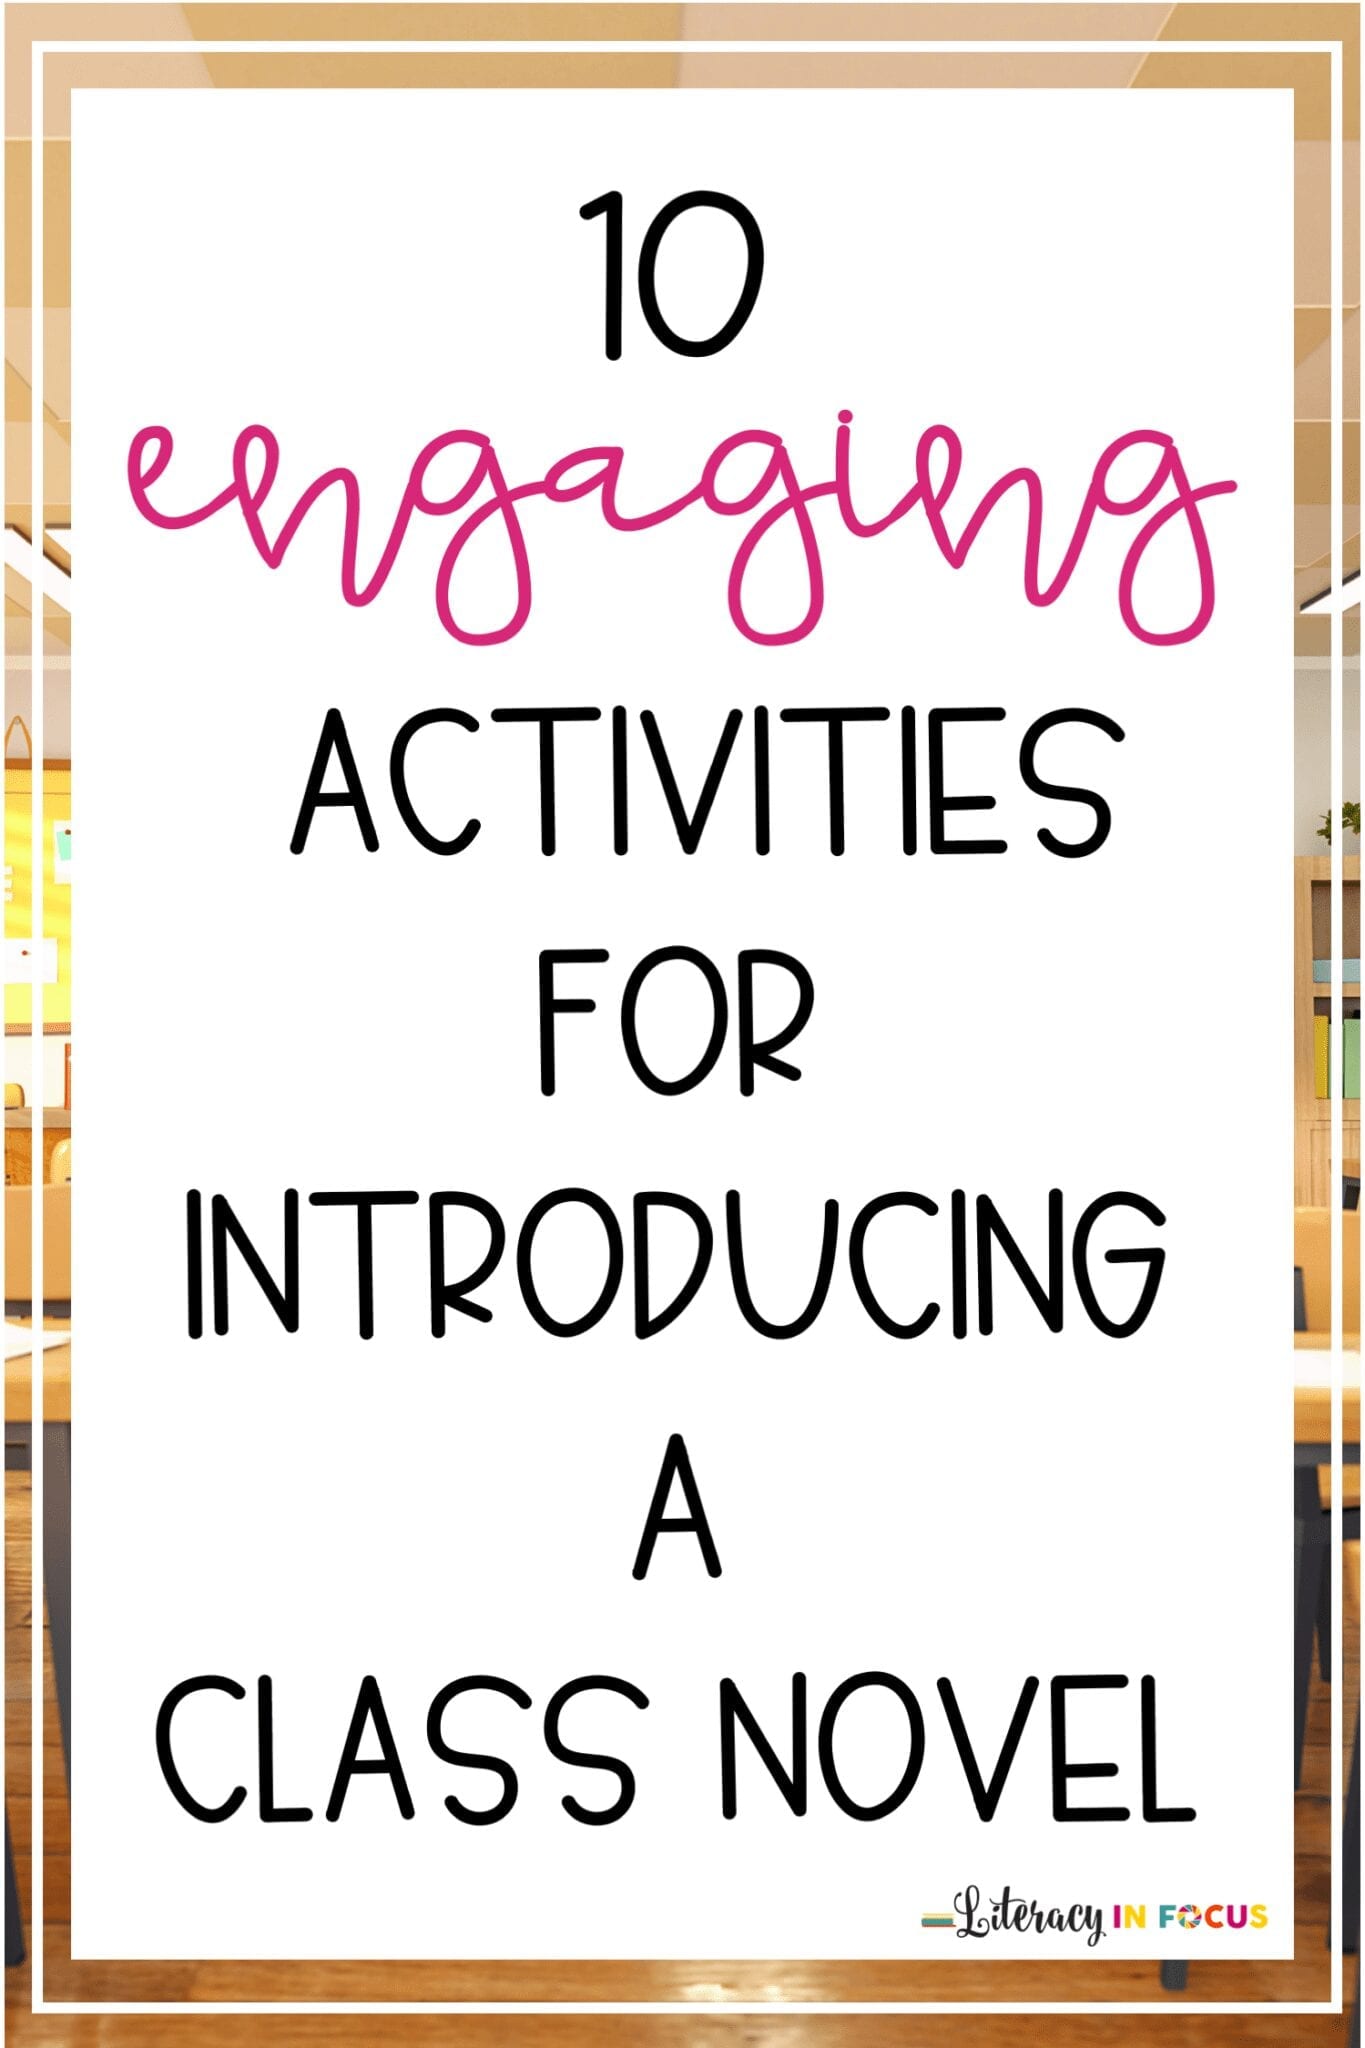 10 Engaging Activities for Introducing a Class Novel